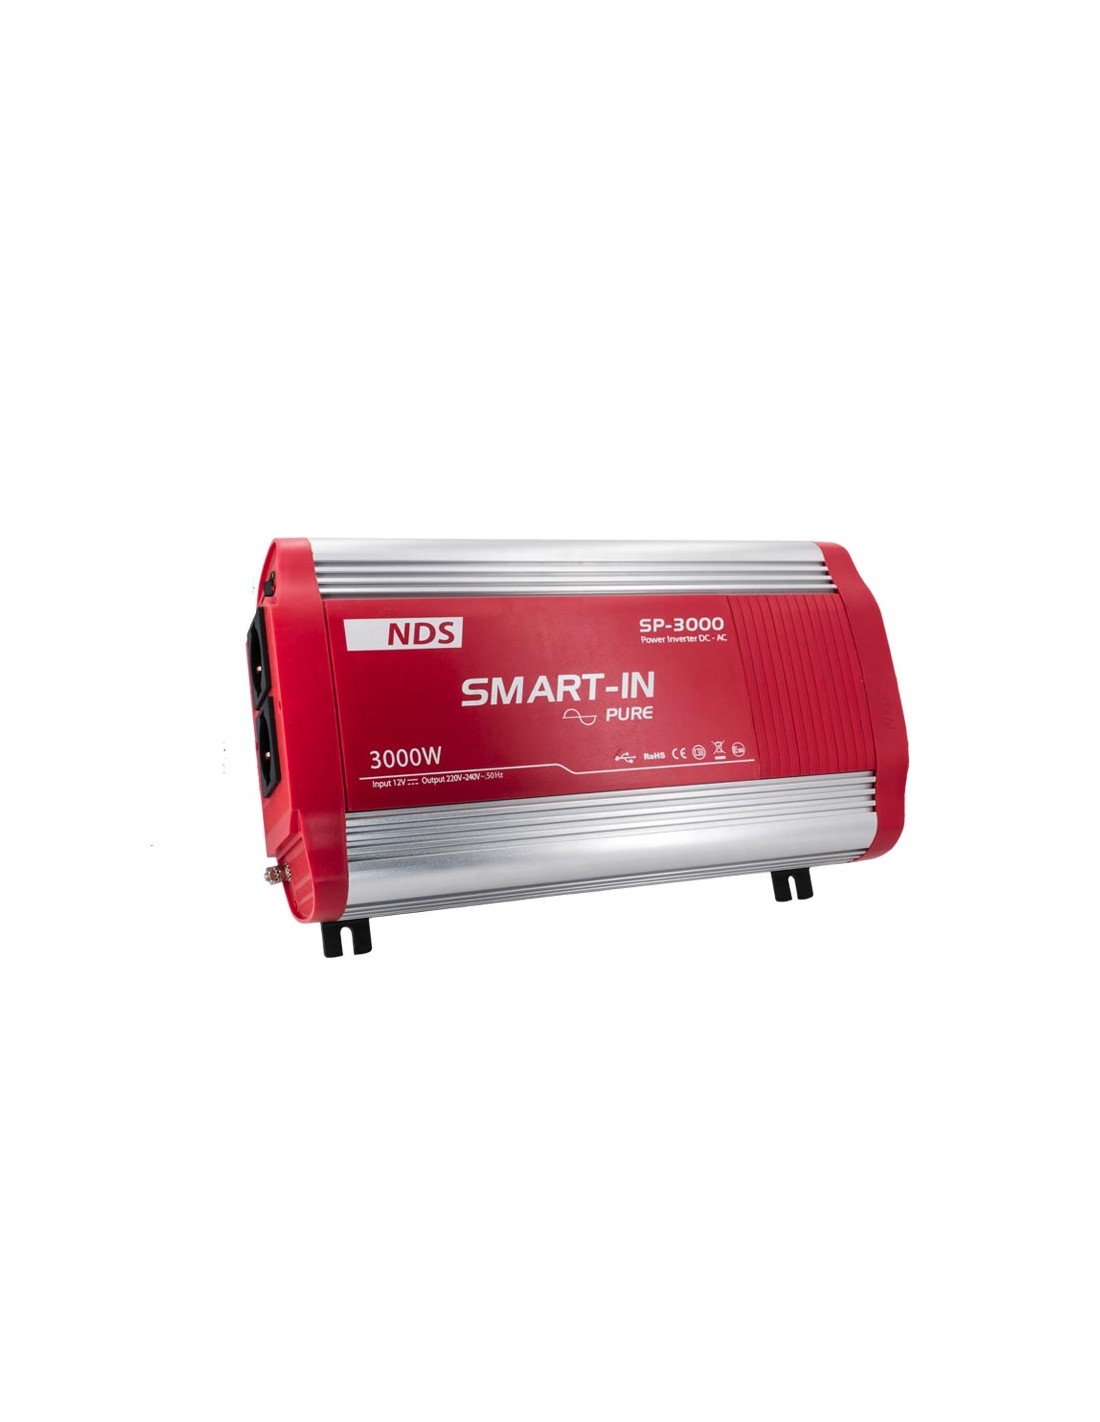 SMART-IN NDS Dometic Wechselrichter 3000W 12V 230Vac reine Welle